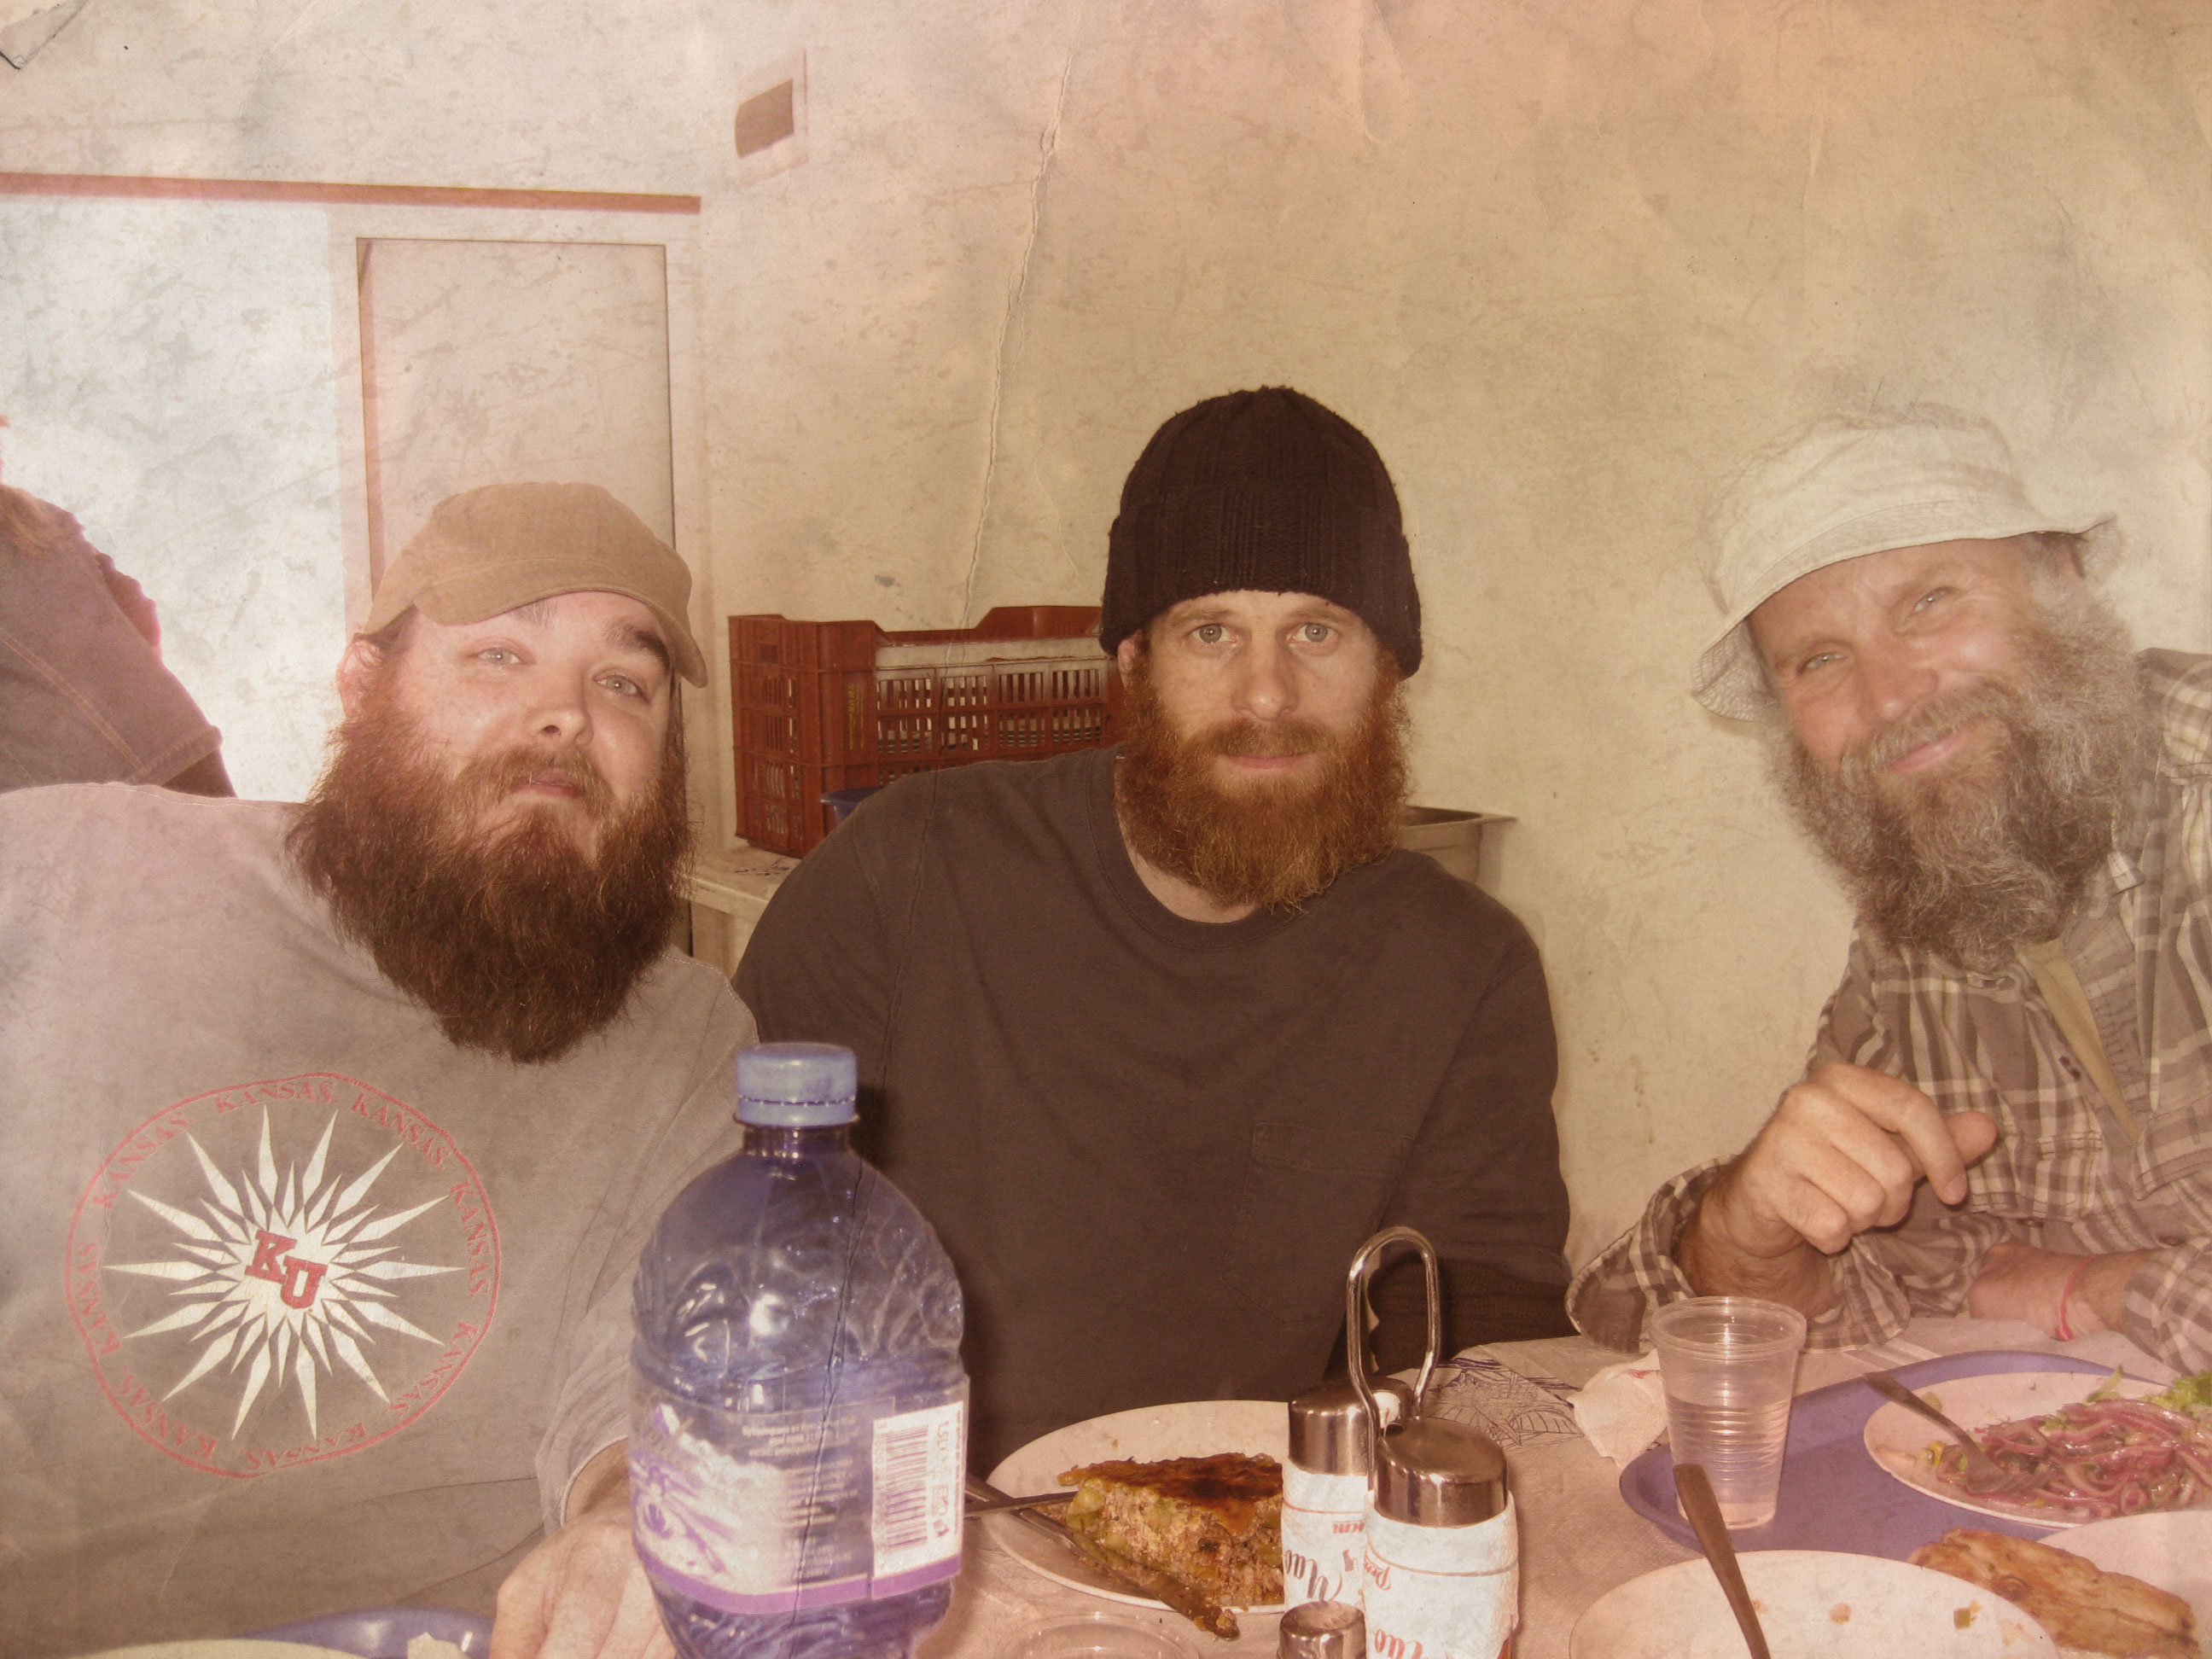 Mark Amos, Shaun Smith, and Marcus Nispel on location for Conan - Bulgaria